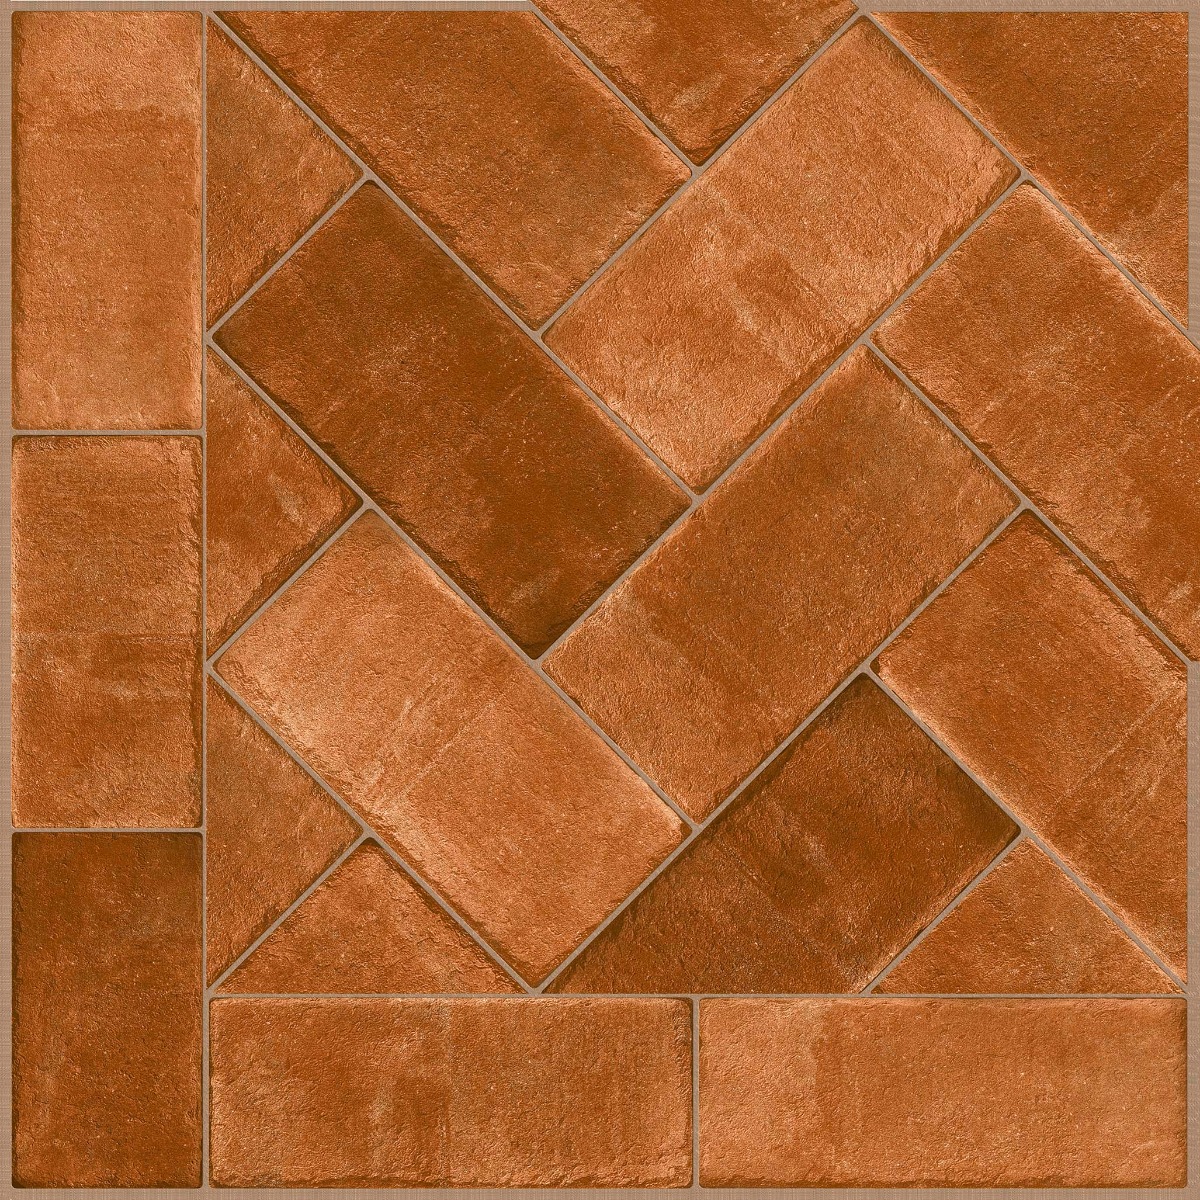 Brown Tiles for Bathroom Tiles, Living Room Tiles, Bedroom Tiles, Accent Tiles, Hospital Tiles, High Traffic Tiles, Bar/Restaurant, Commercial/Office, Outdoor Area, School & Collages